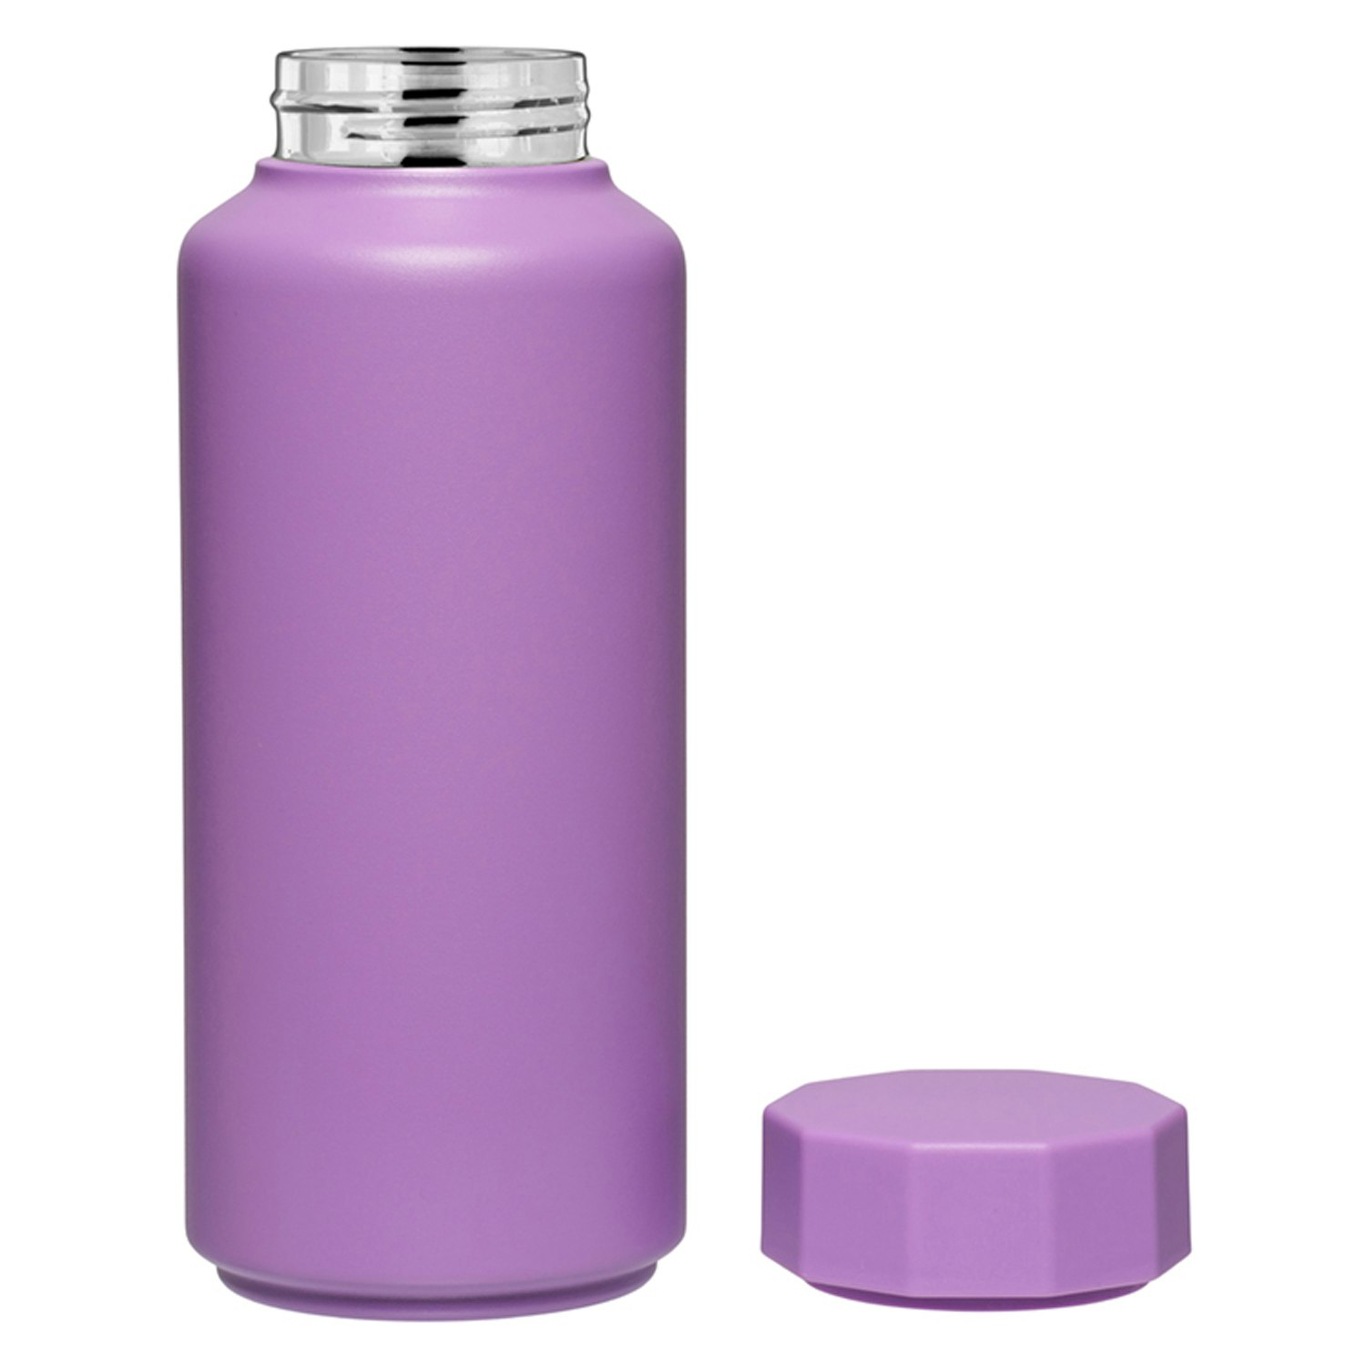 https://royaldesign.com/image/2/design-letters-thermos-bottle-50-cl-25?w=800&quality=80